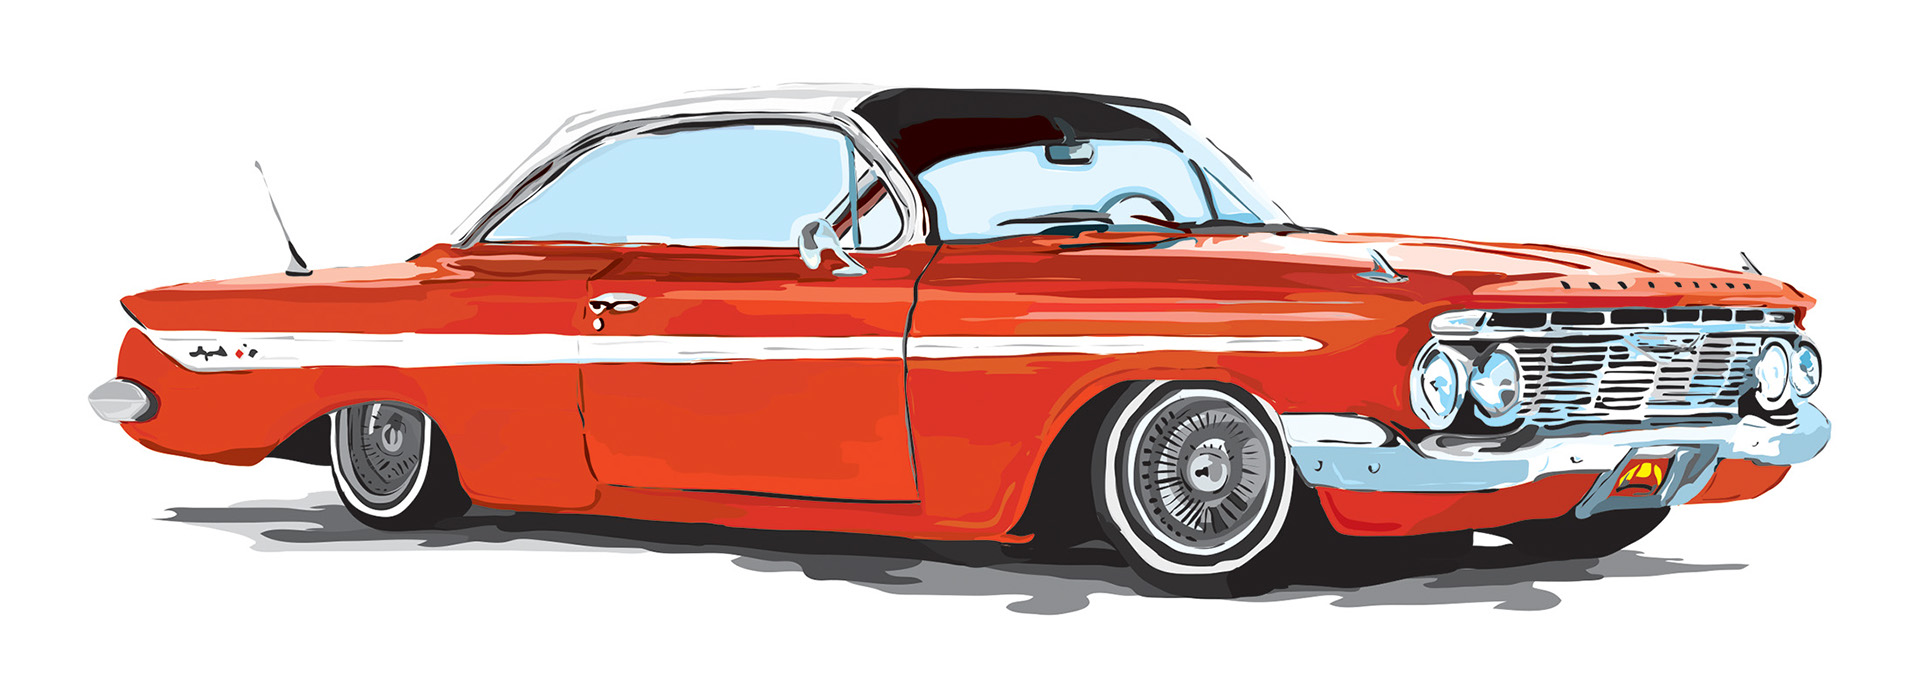 1961 Chevy Impala for Lowrider Magazine - Illustration. 